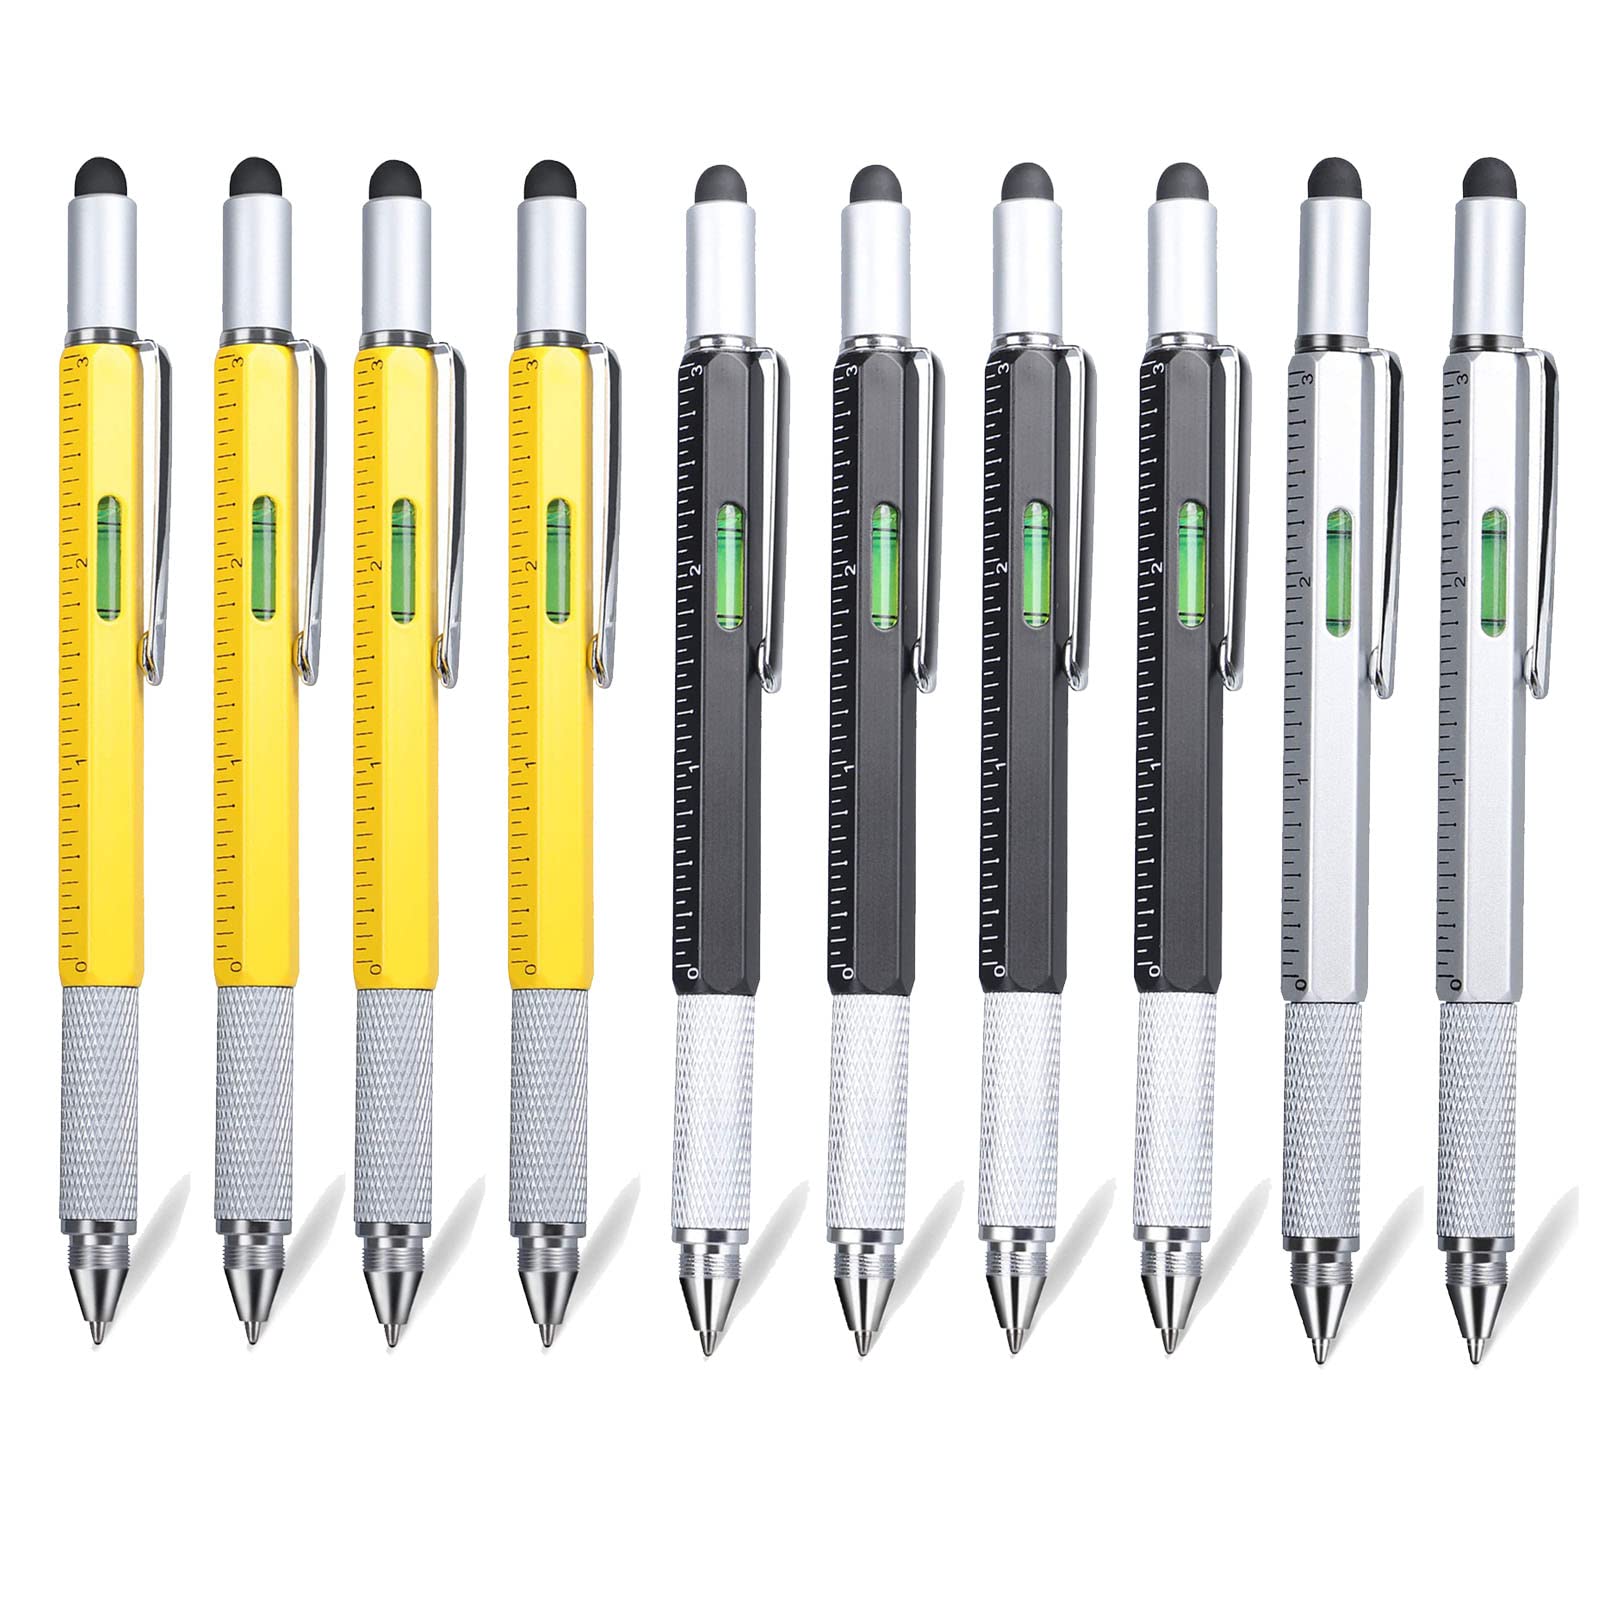 DASDSA Multi-Function Pen Set